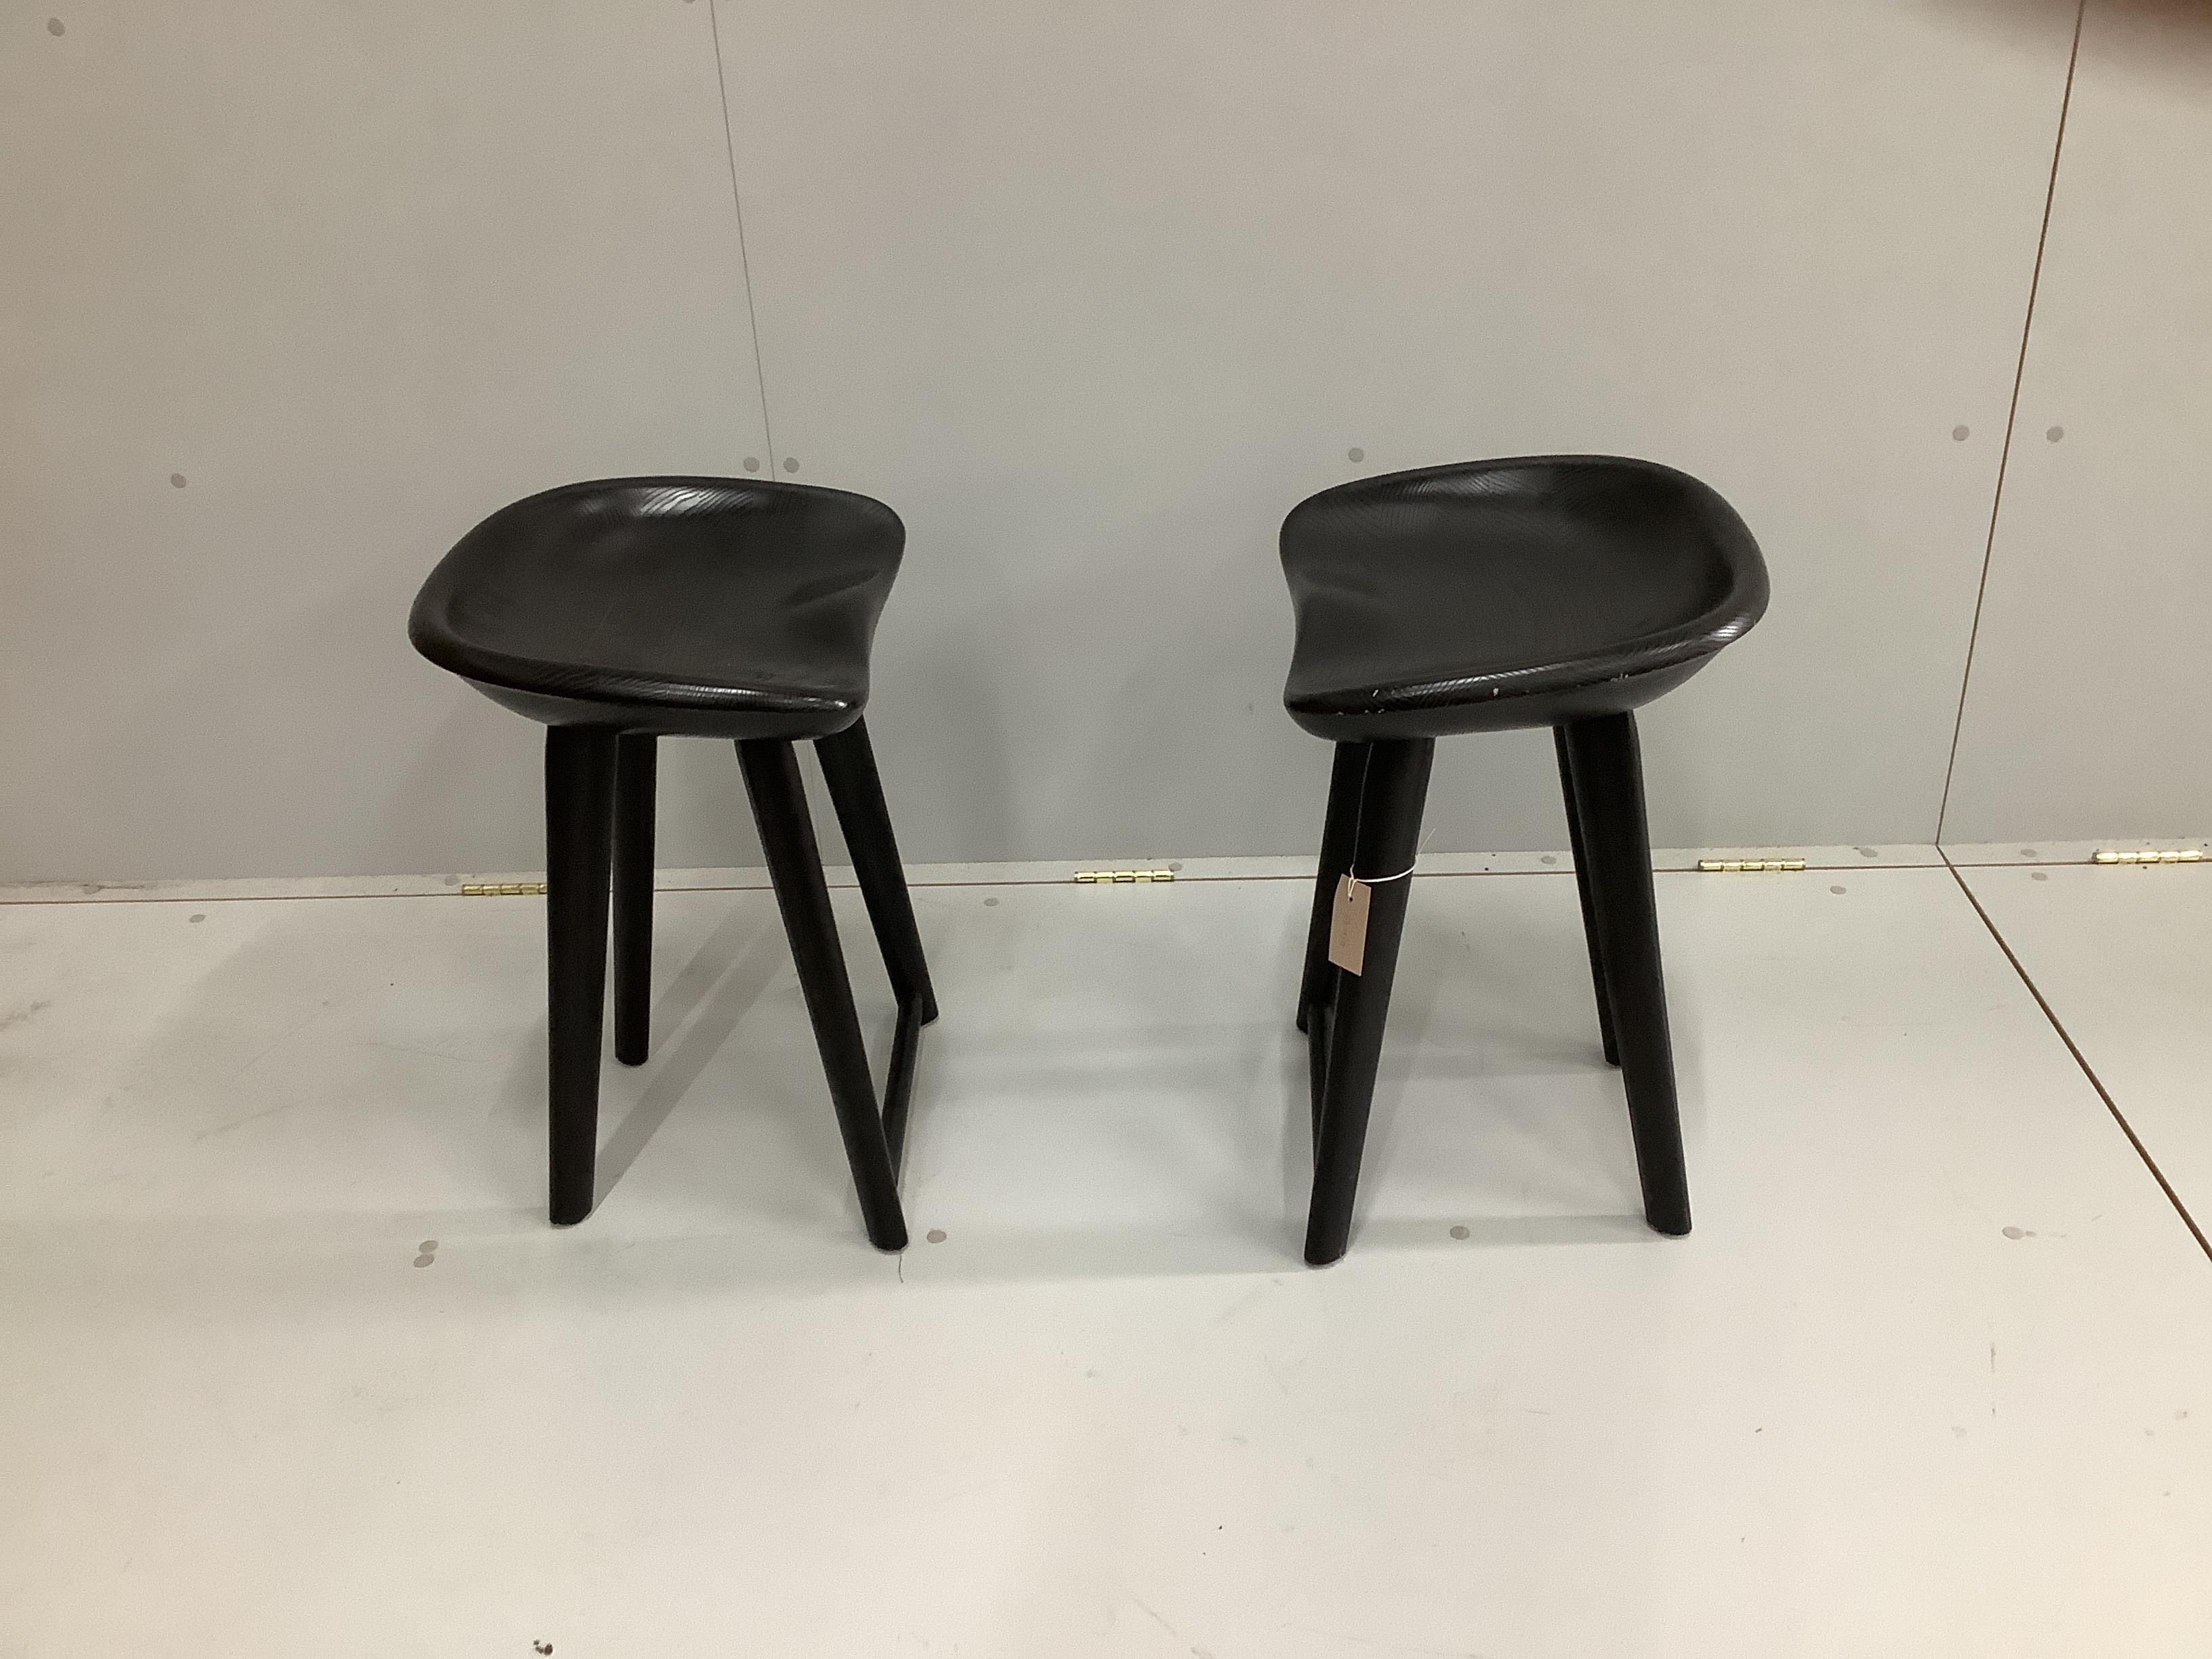 A pair of Craig Bassam and Scott Fellows black lacquer ash stools, width 43cm, depth 34cm, height 56cm